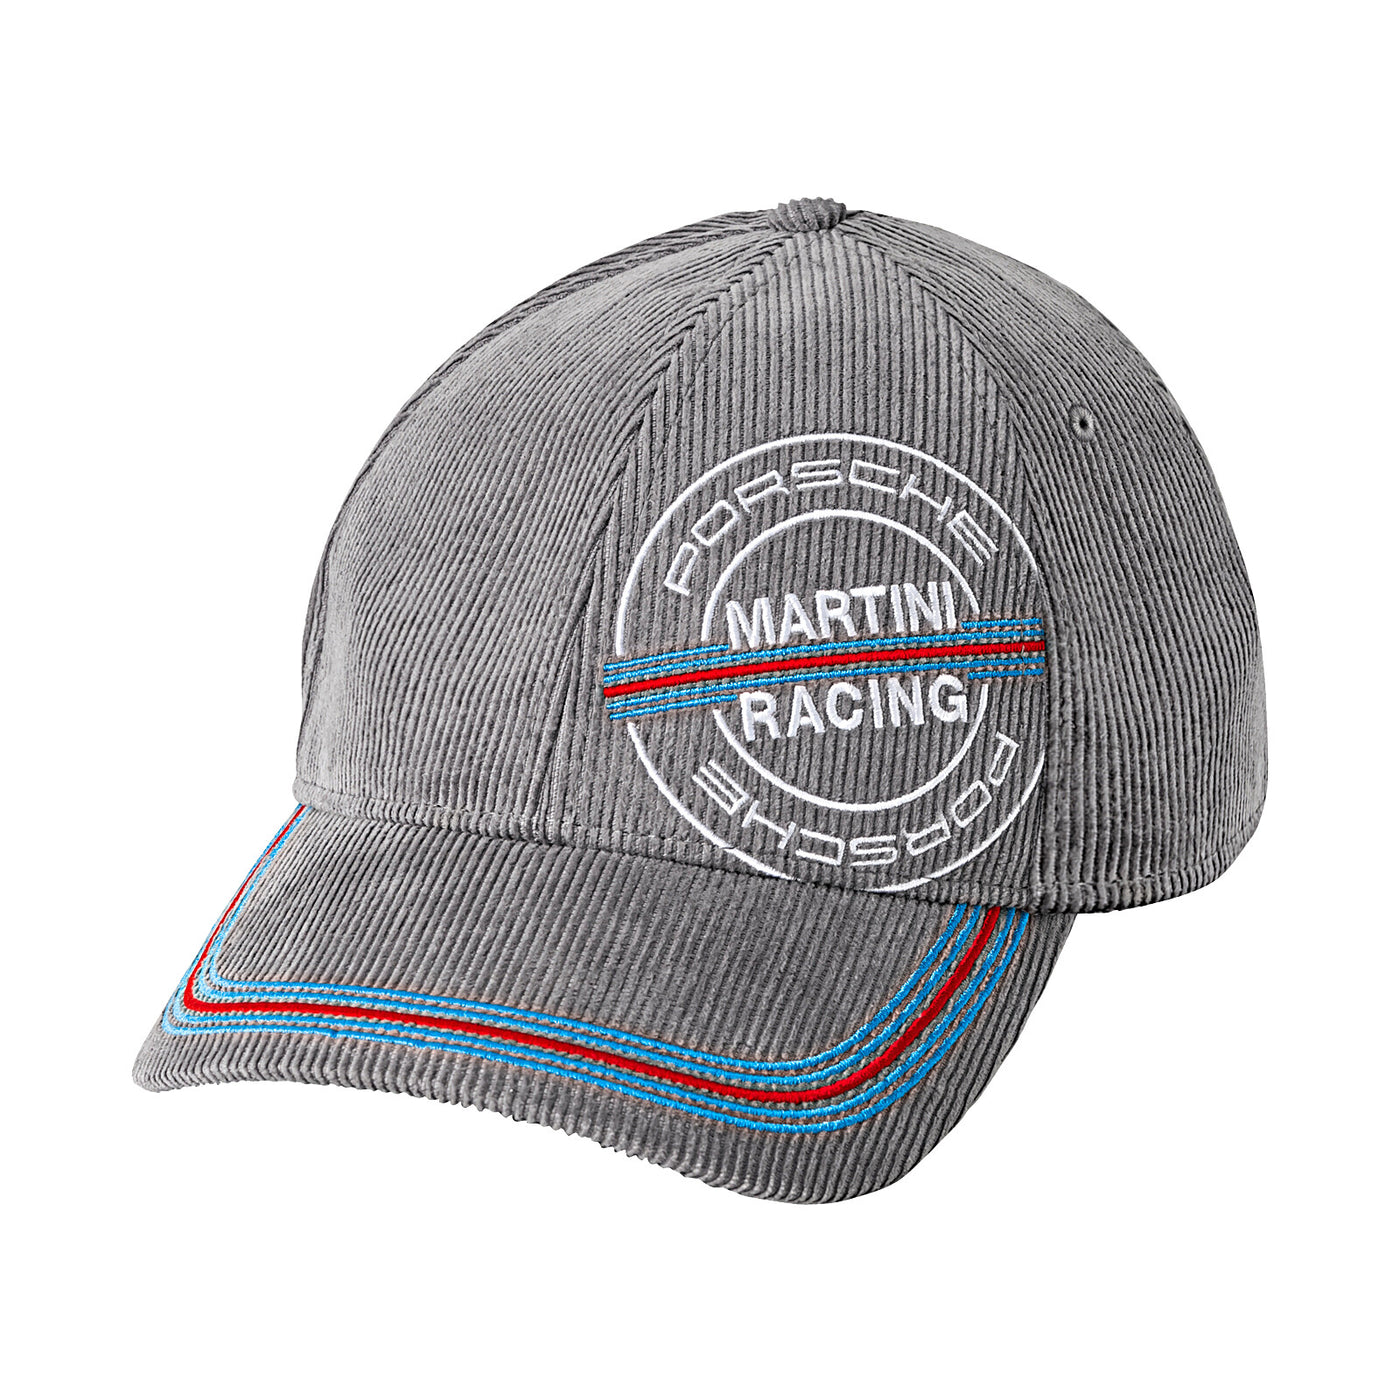 Porsche Baseball Hat - Martini Racing